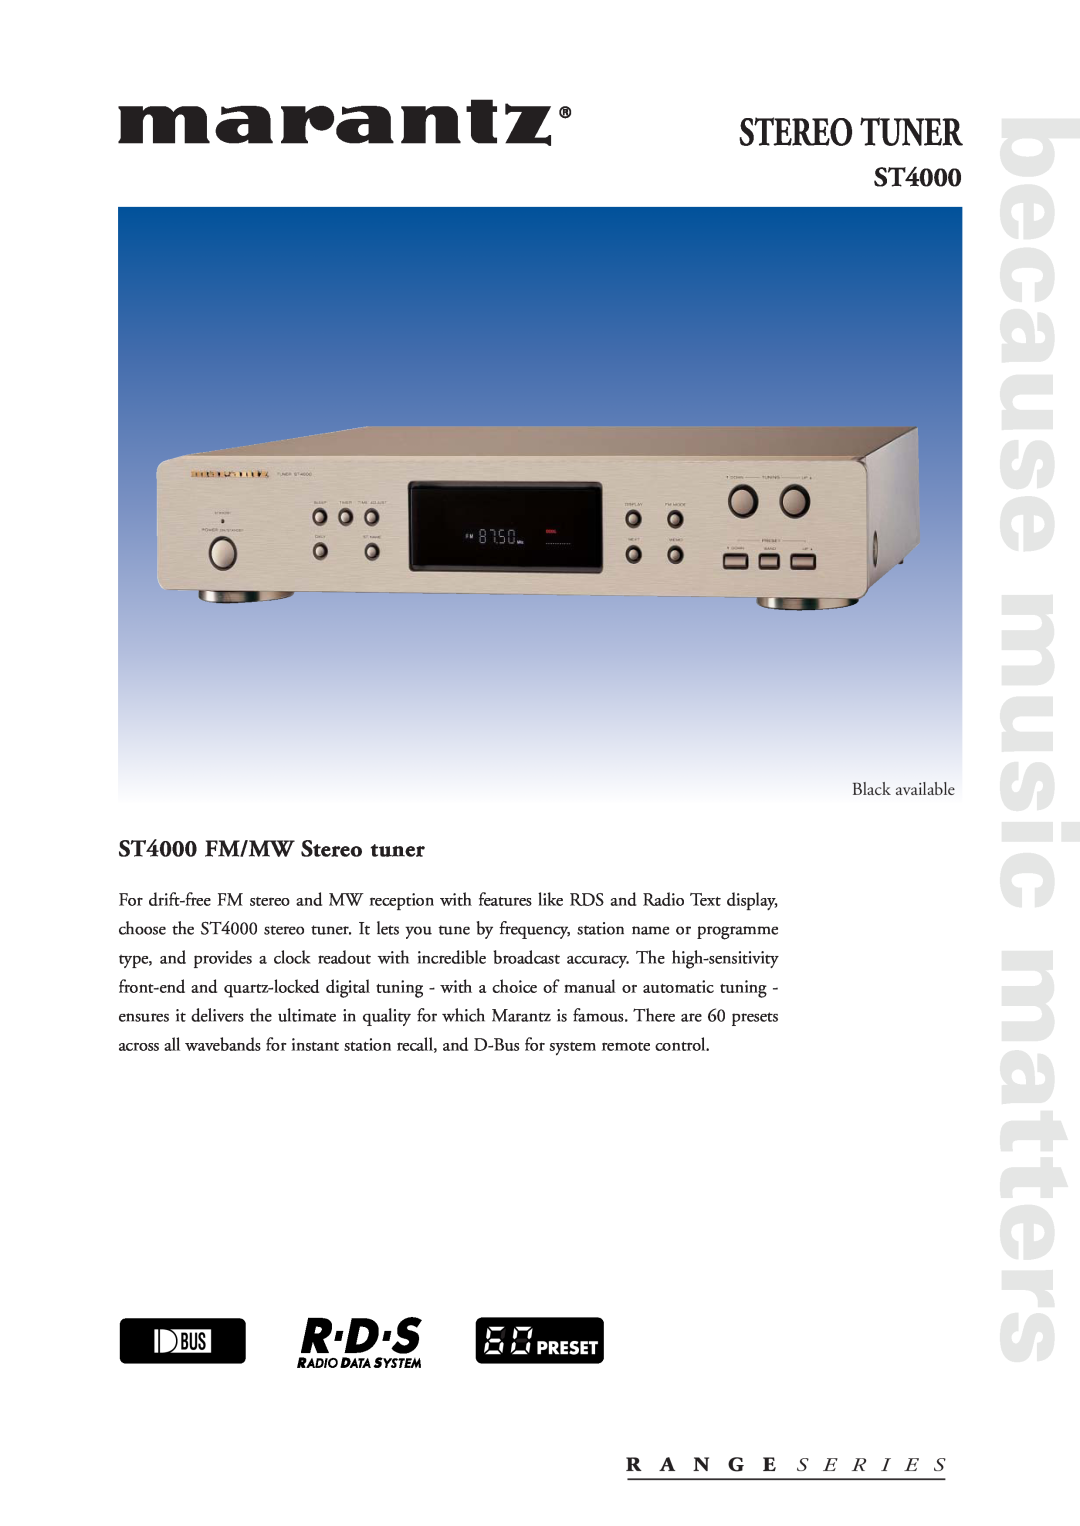 Marantz manual ST4000 FM/MW Stereo tuner, Stereo Tuner 